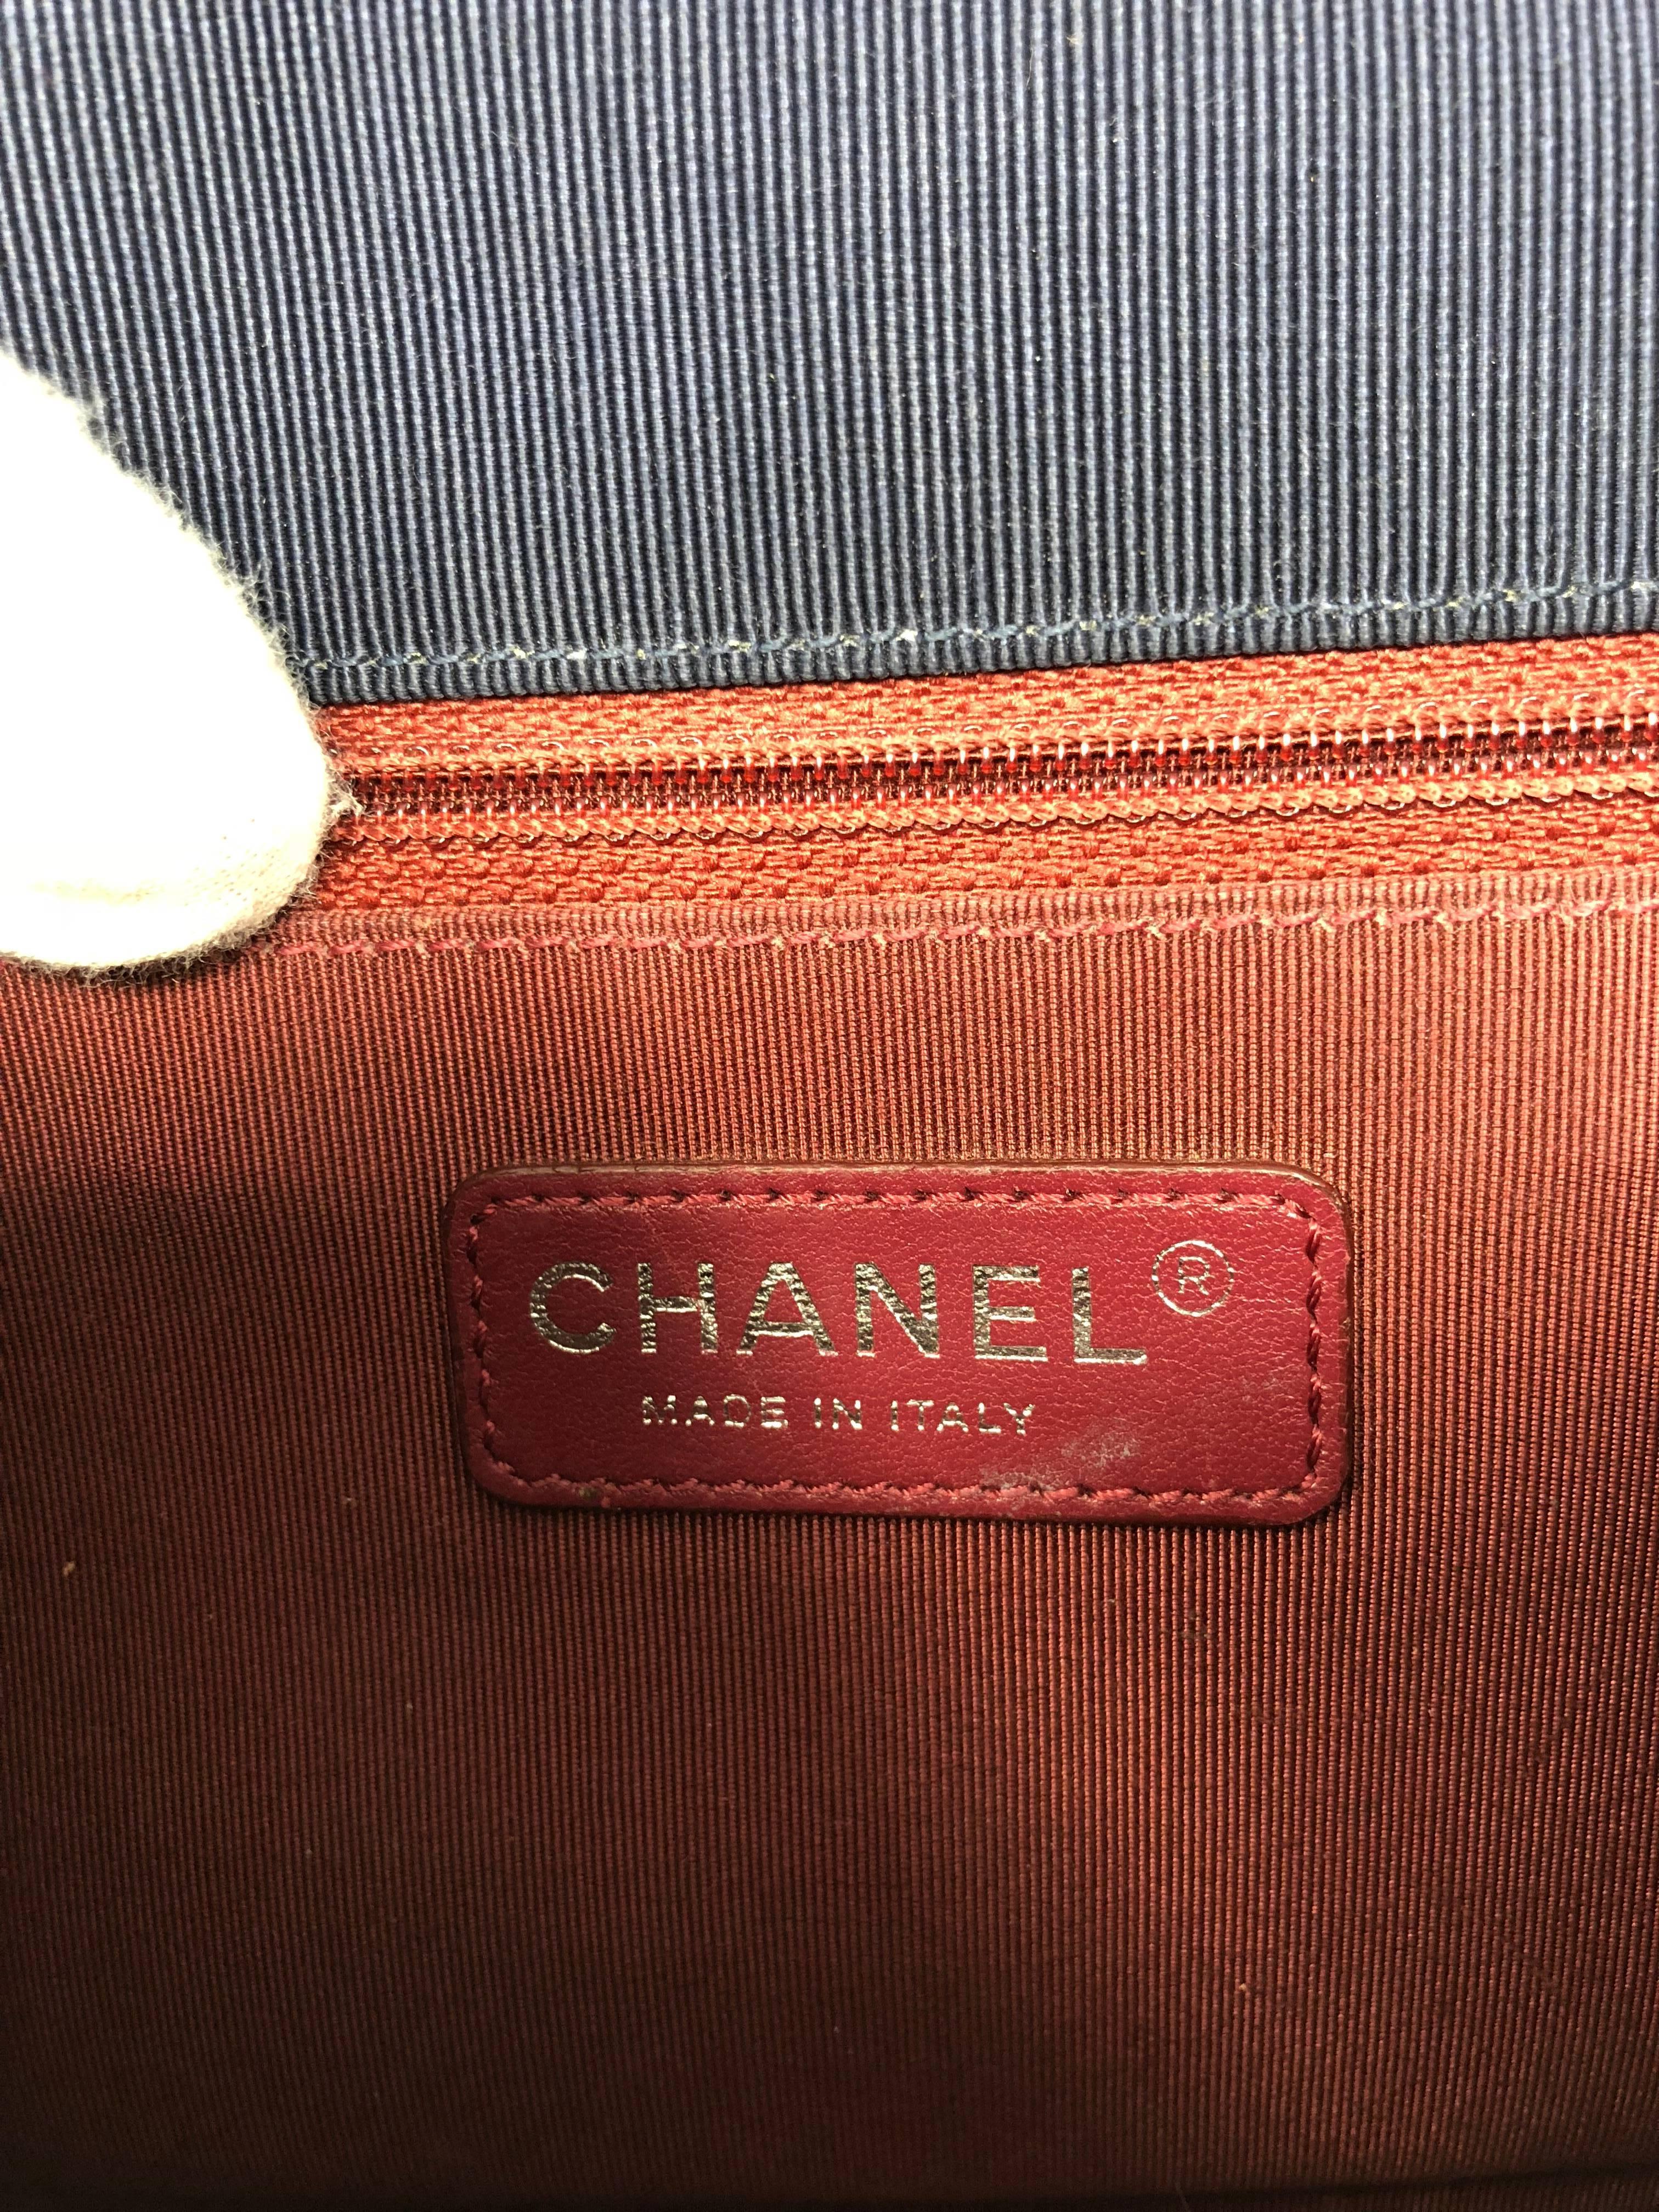 2015 Ballerine Chanel Flap Bag  4